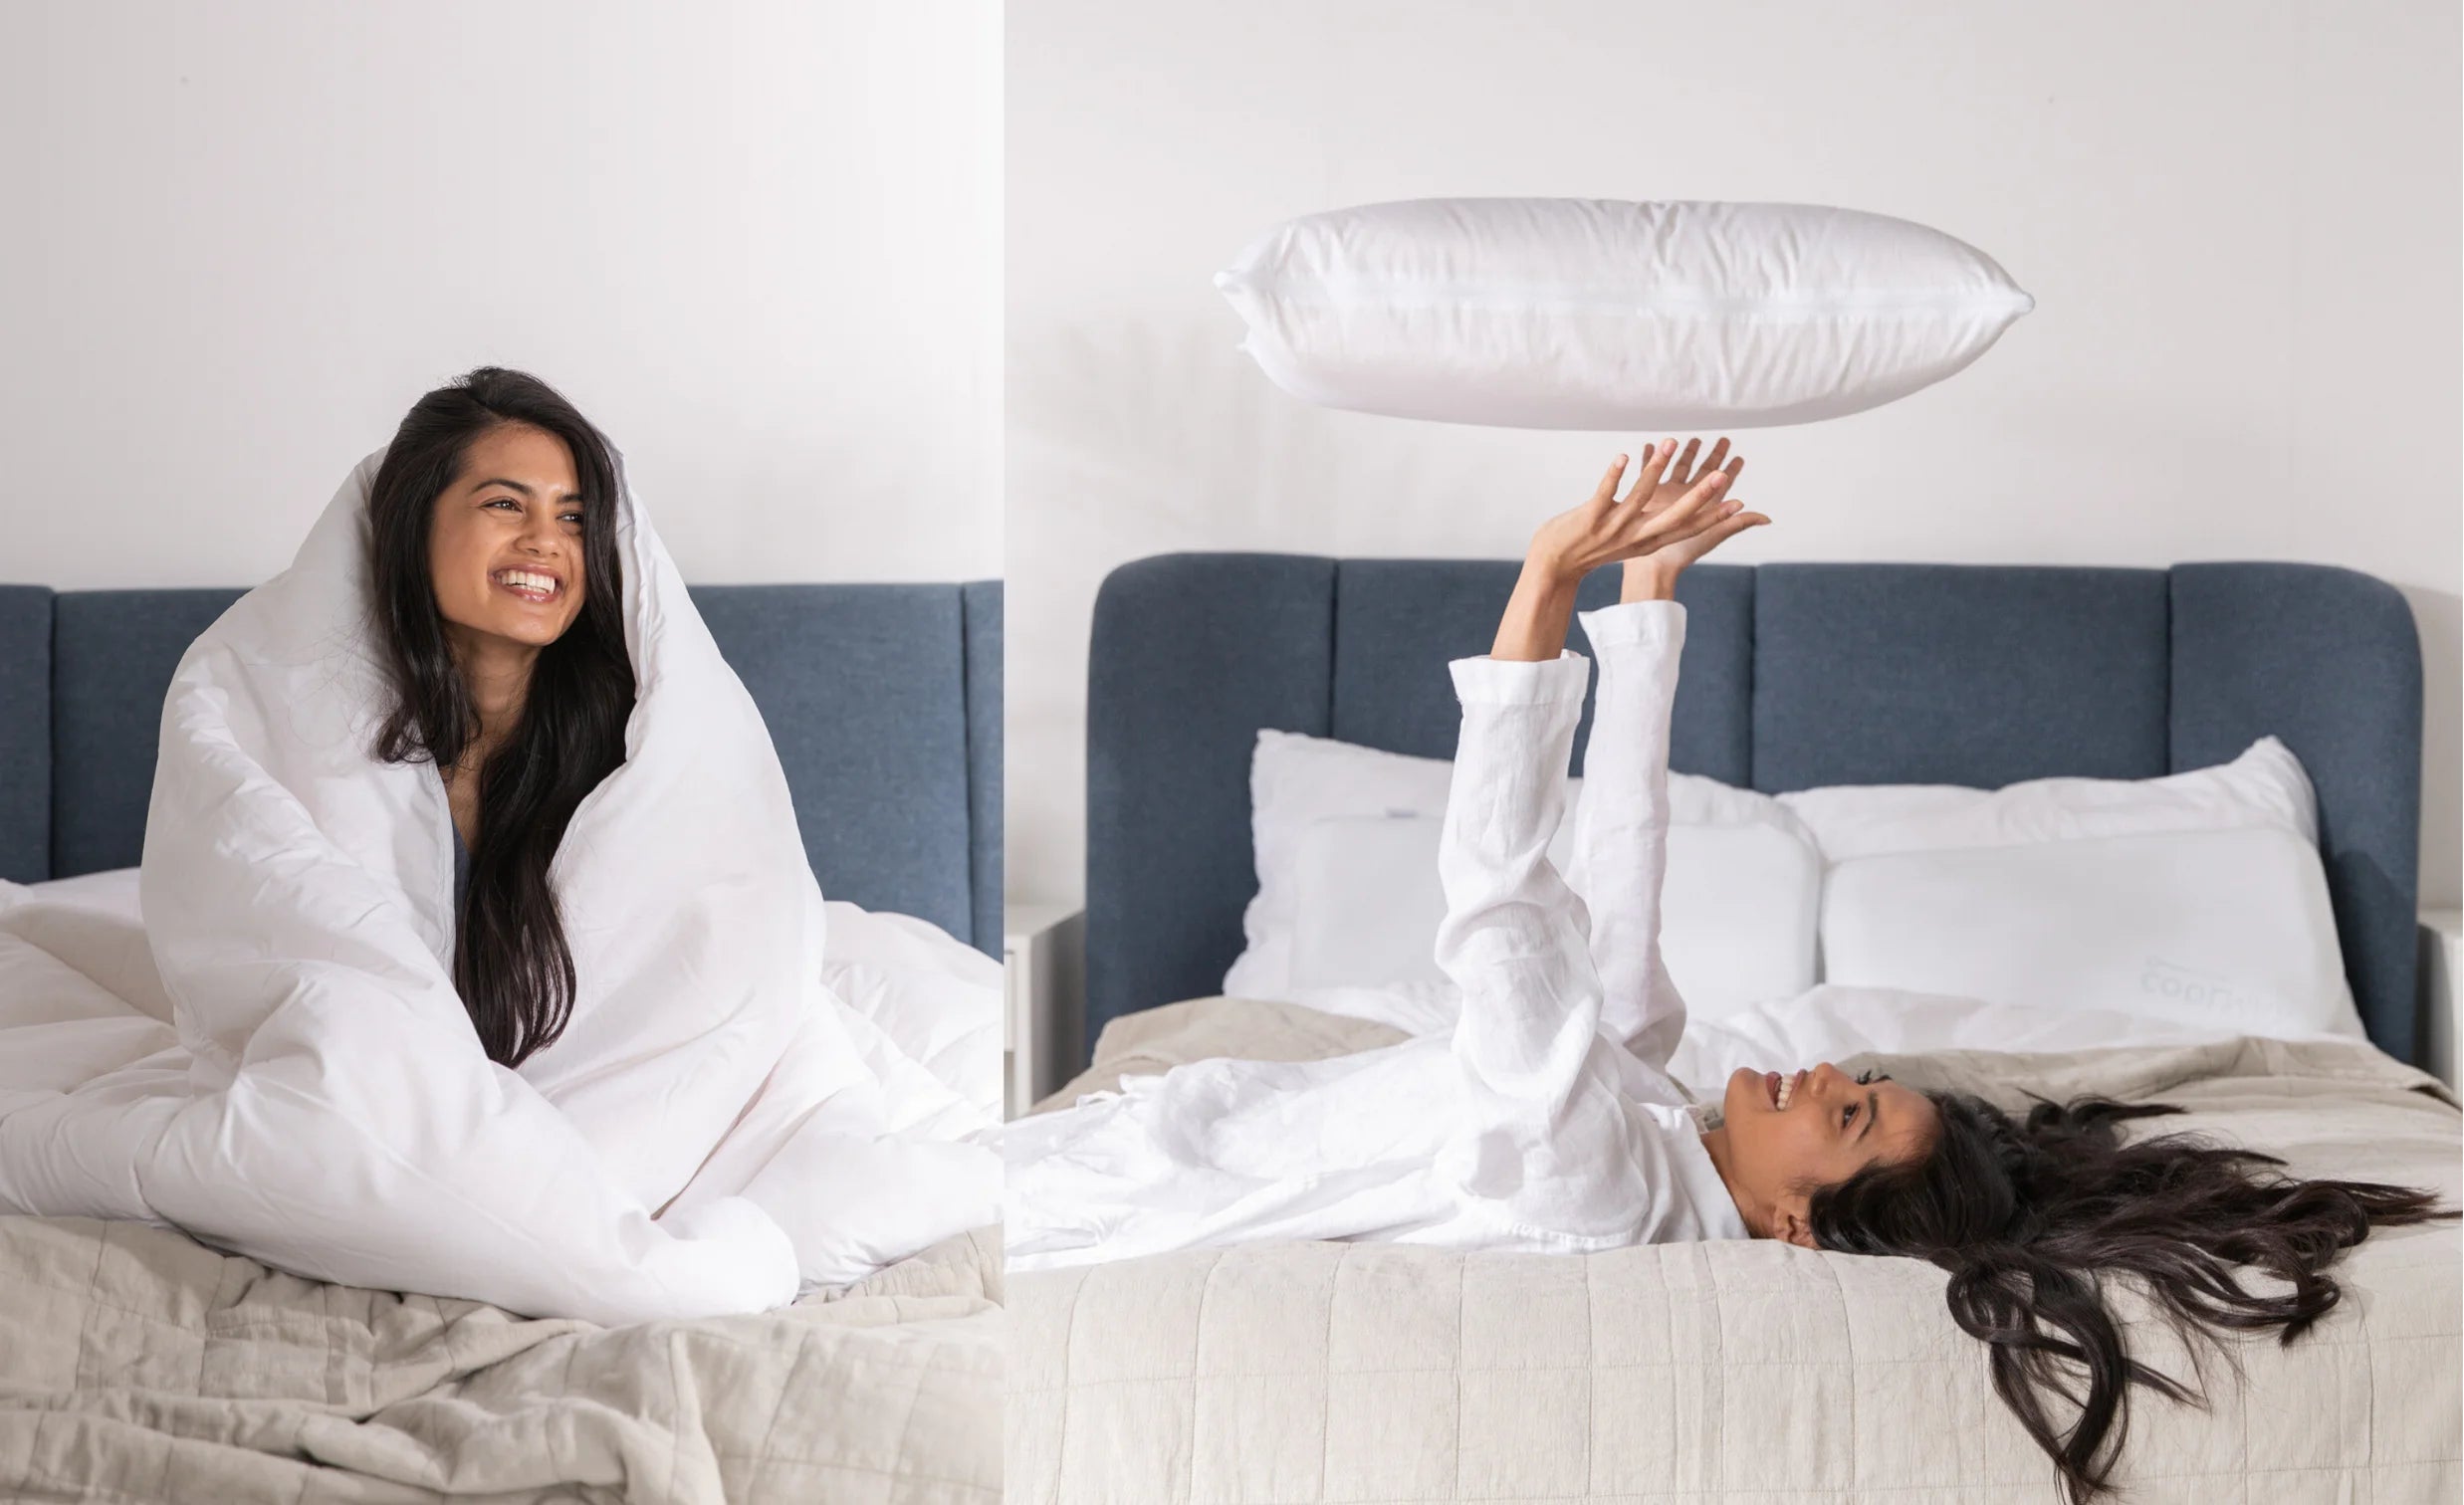 Putnams Leg Rest - Leg Raiser Bed Pillow